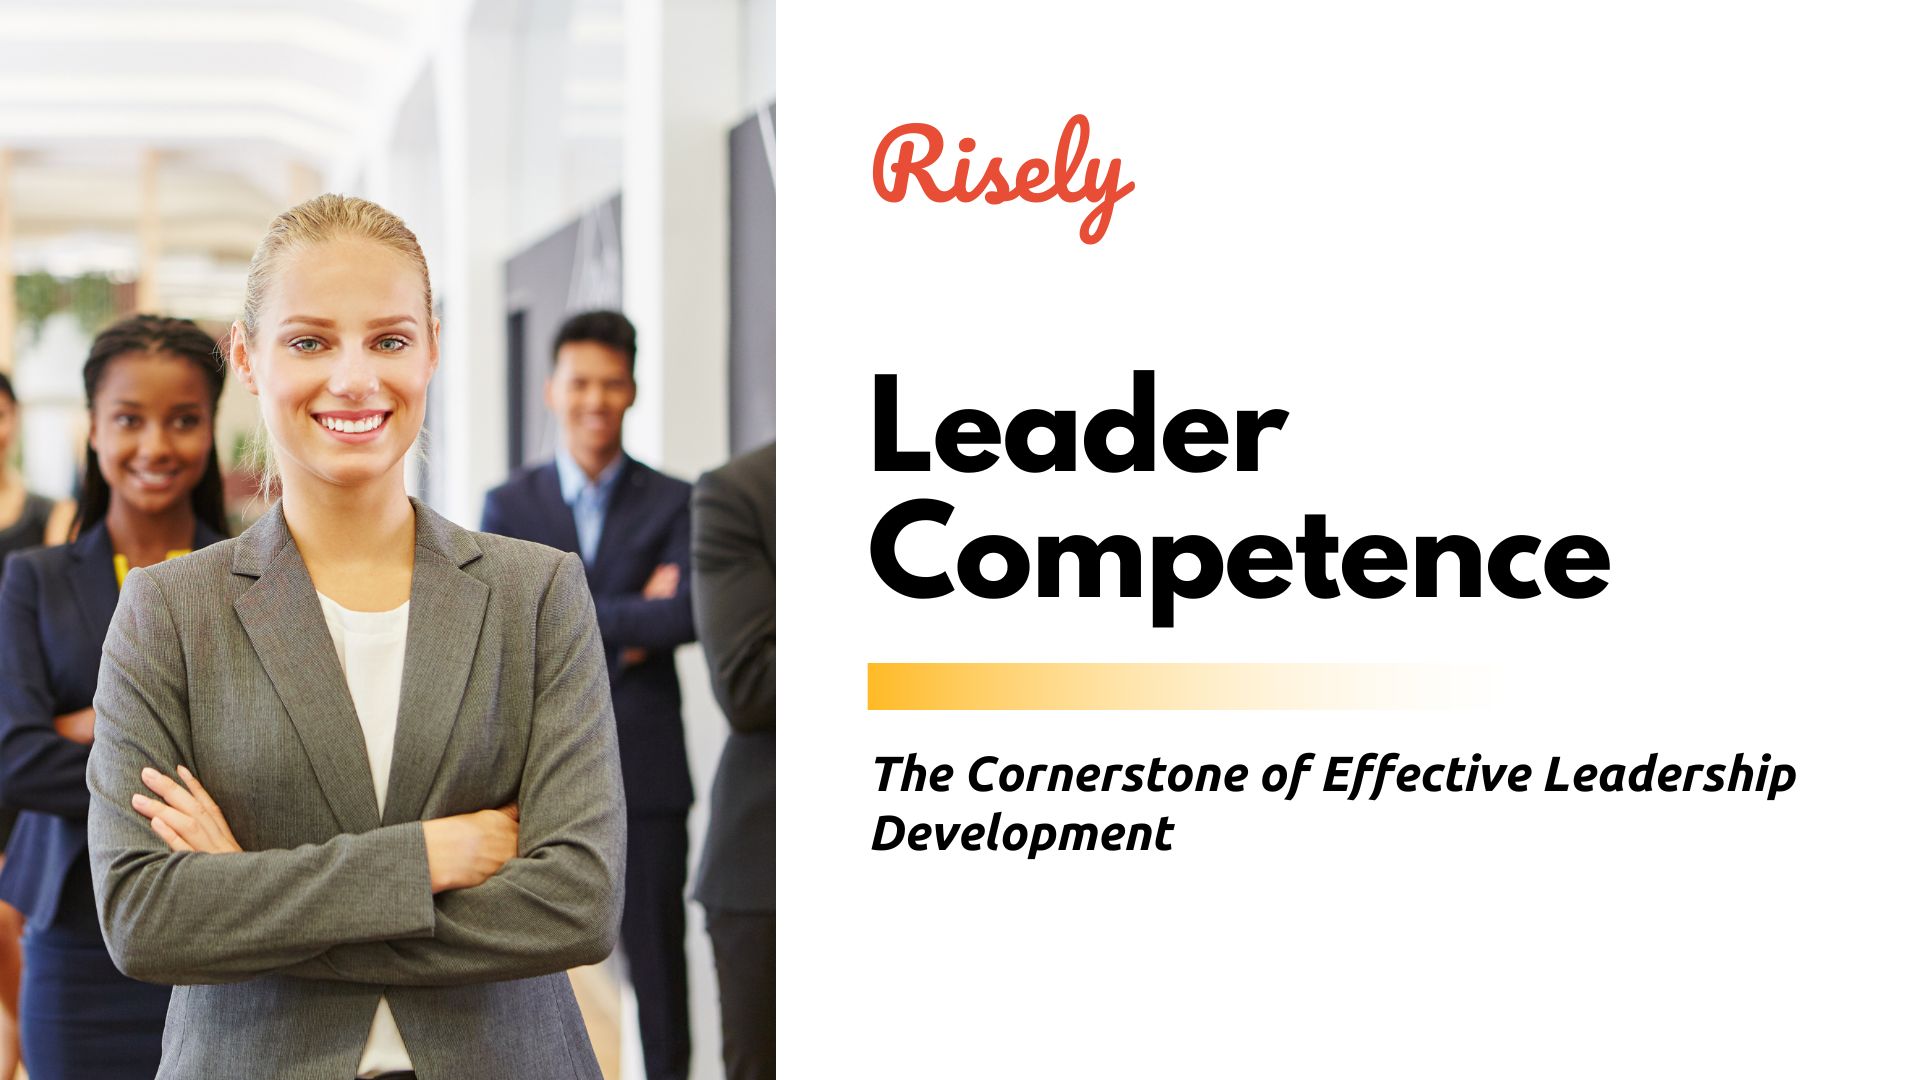 Leader Competence: The Cornerstone of Effective Leadership Development